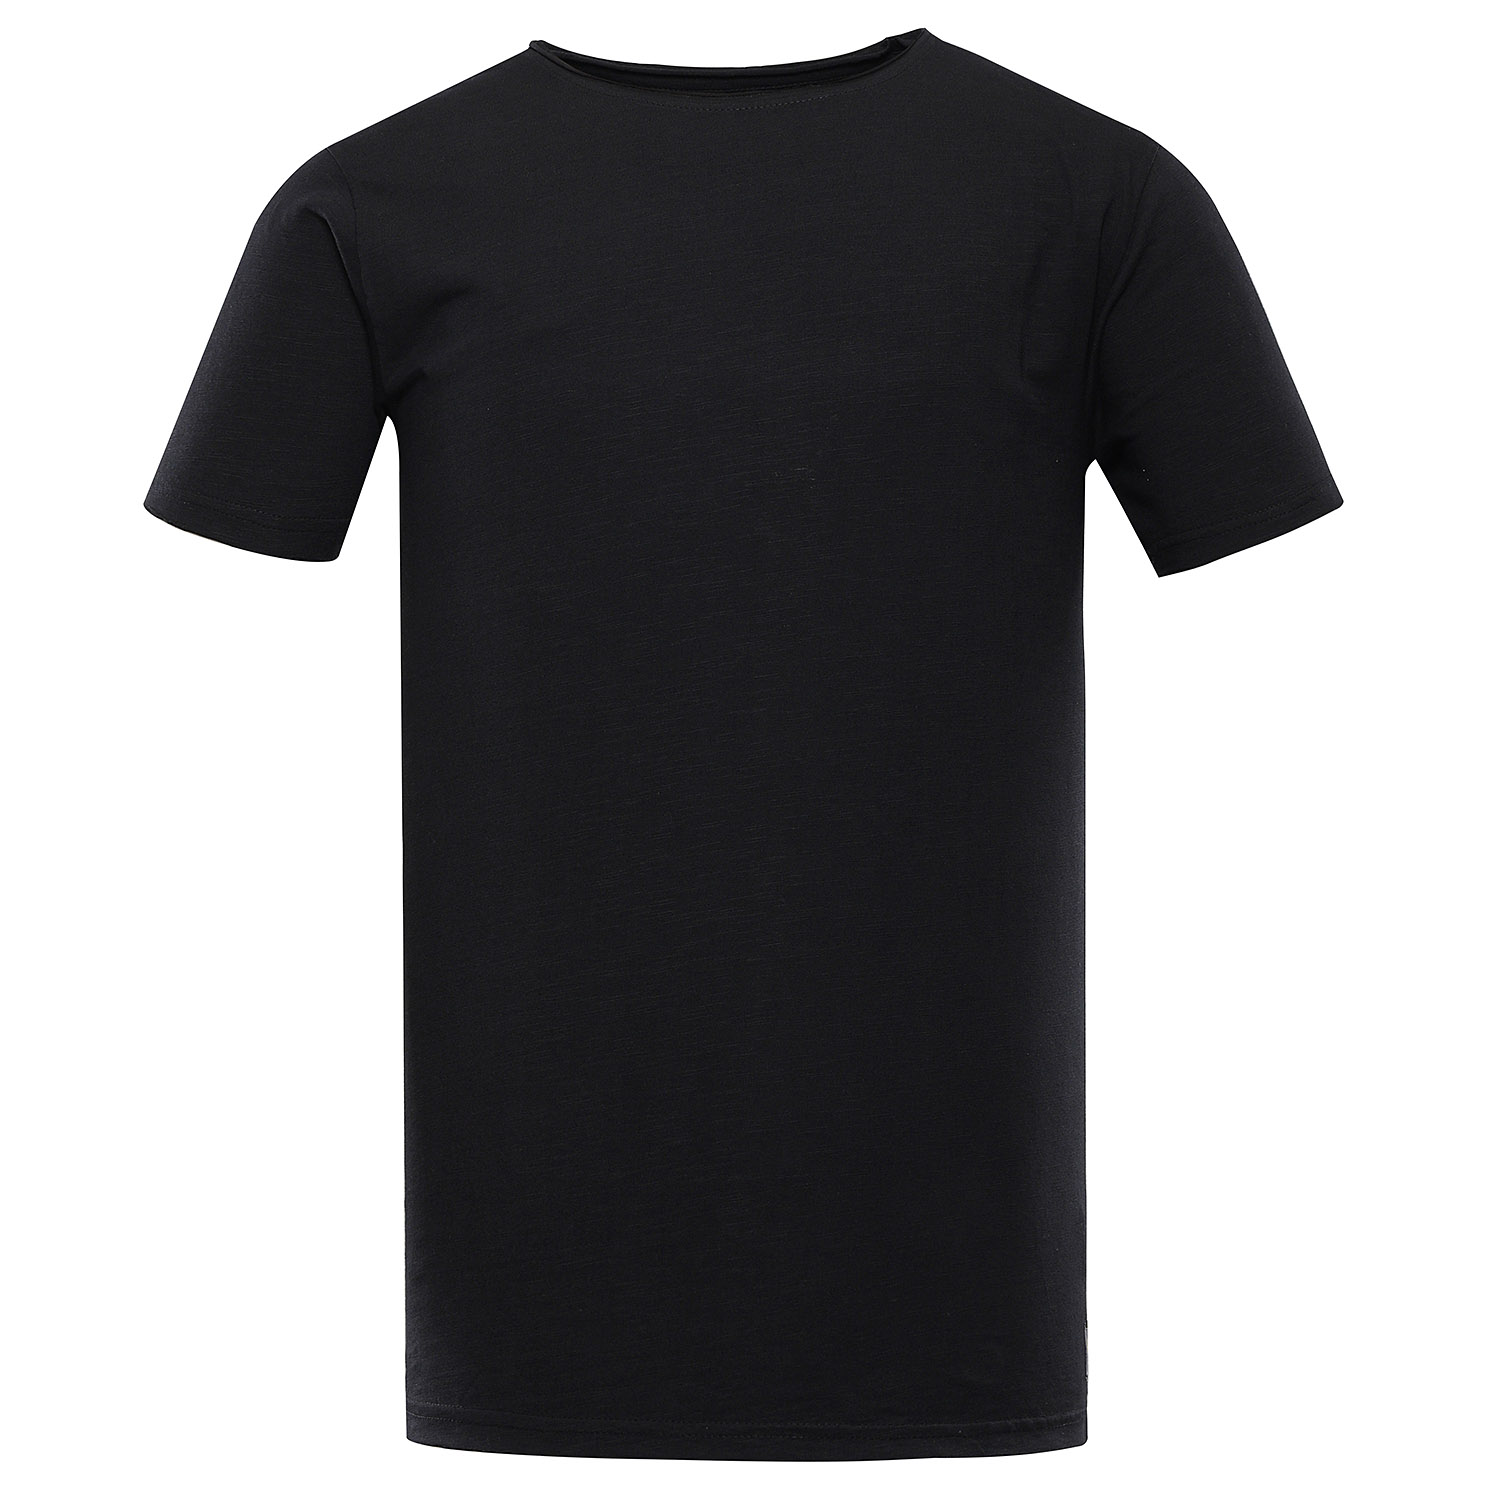 Men's cotton T-shirt nax NAX MAYENS black